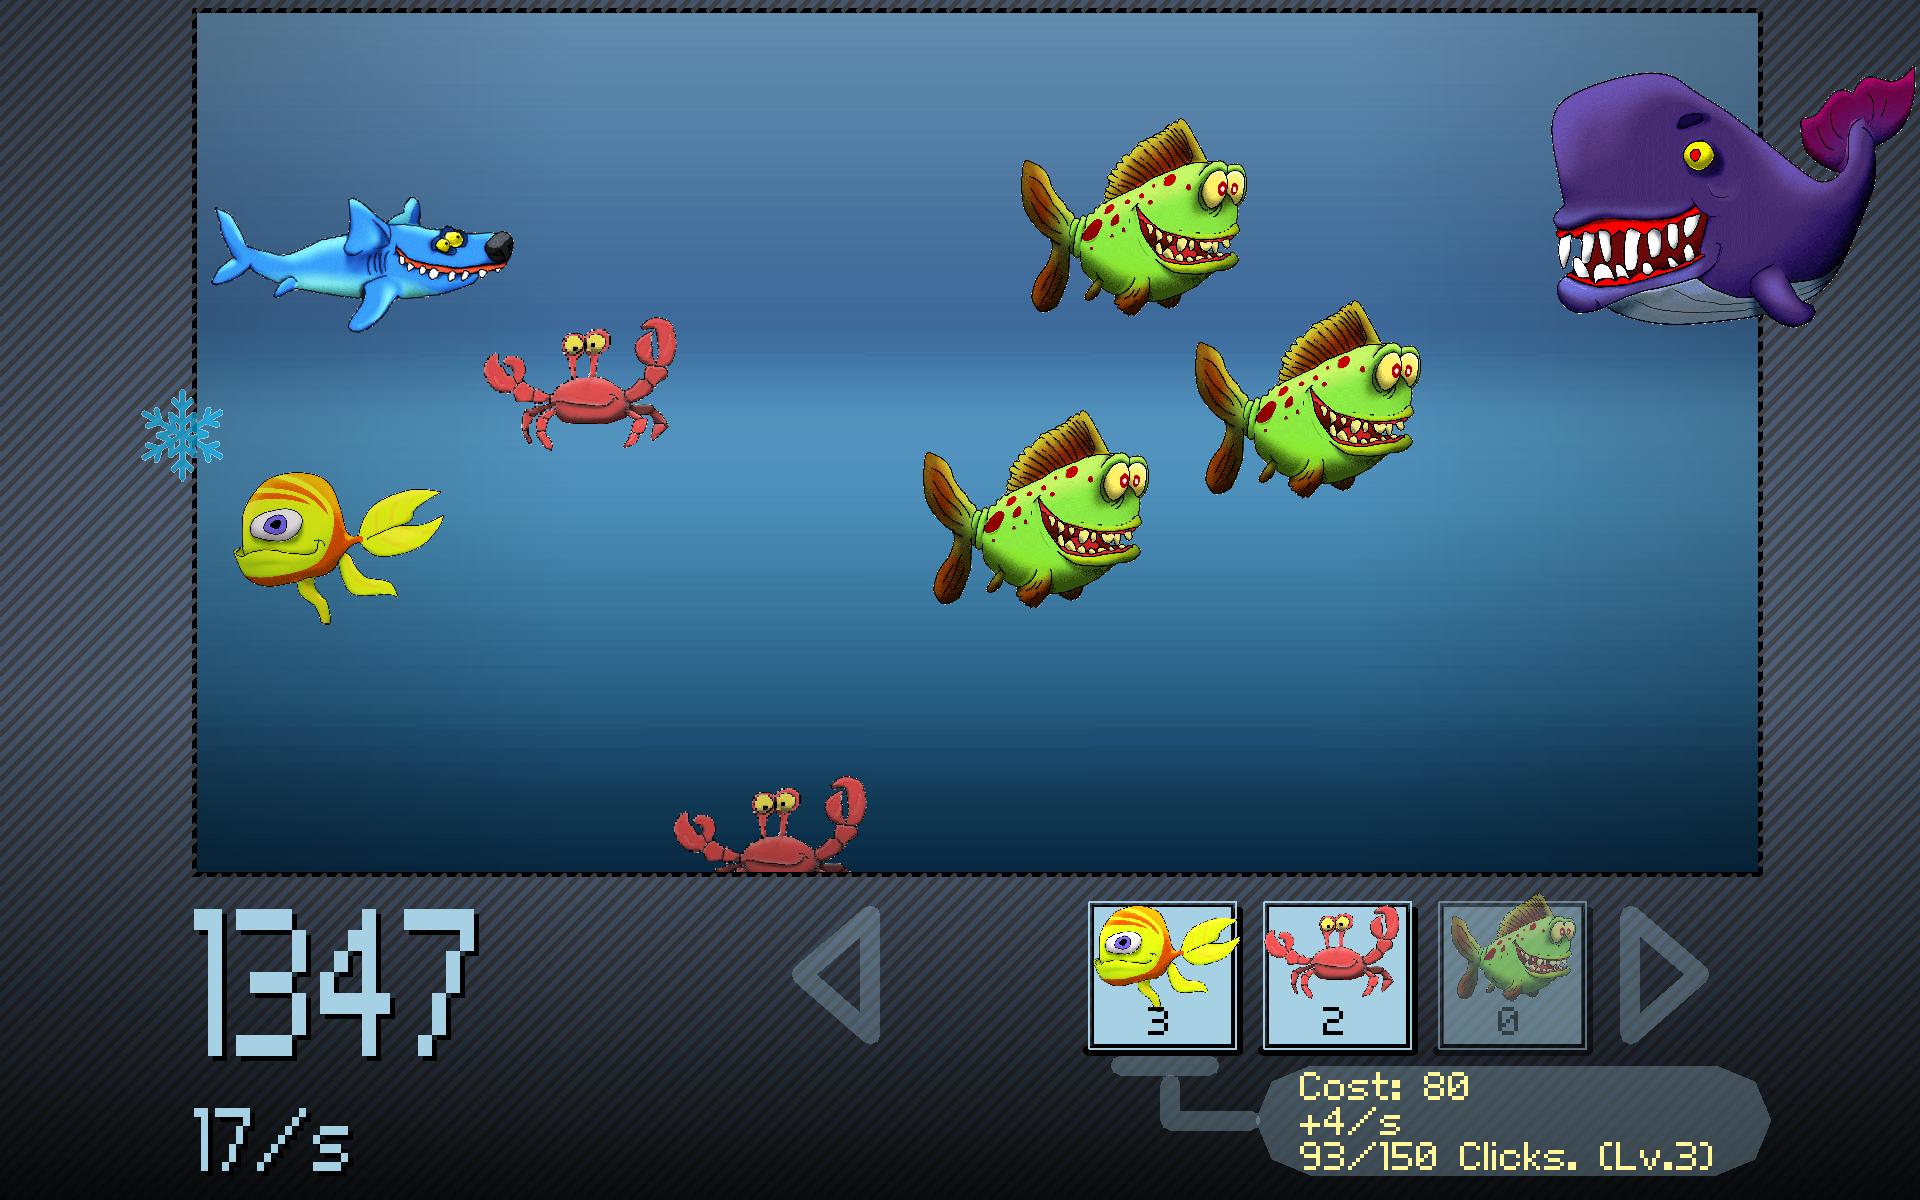 Cat fish на андроид. Кликер про рыбу. Рыбы игры на андроид. Игра про рыбок Android. Смайл Фиш андроид.